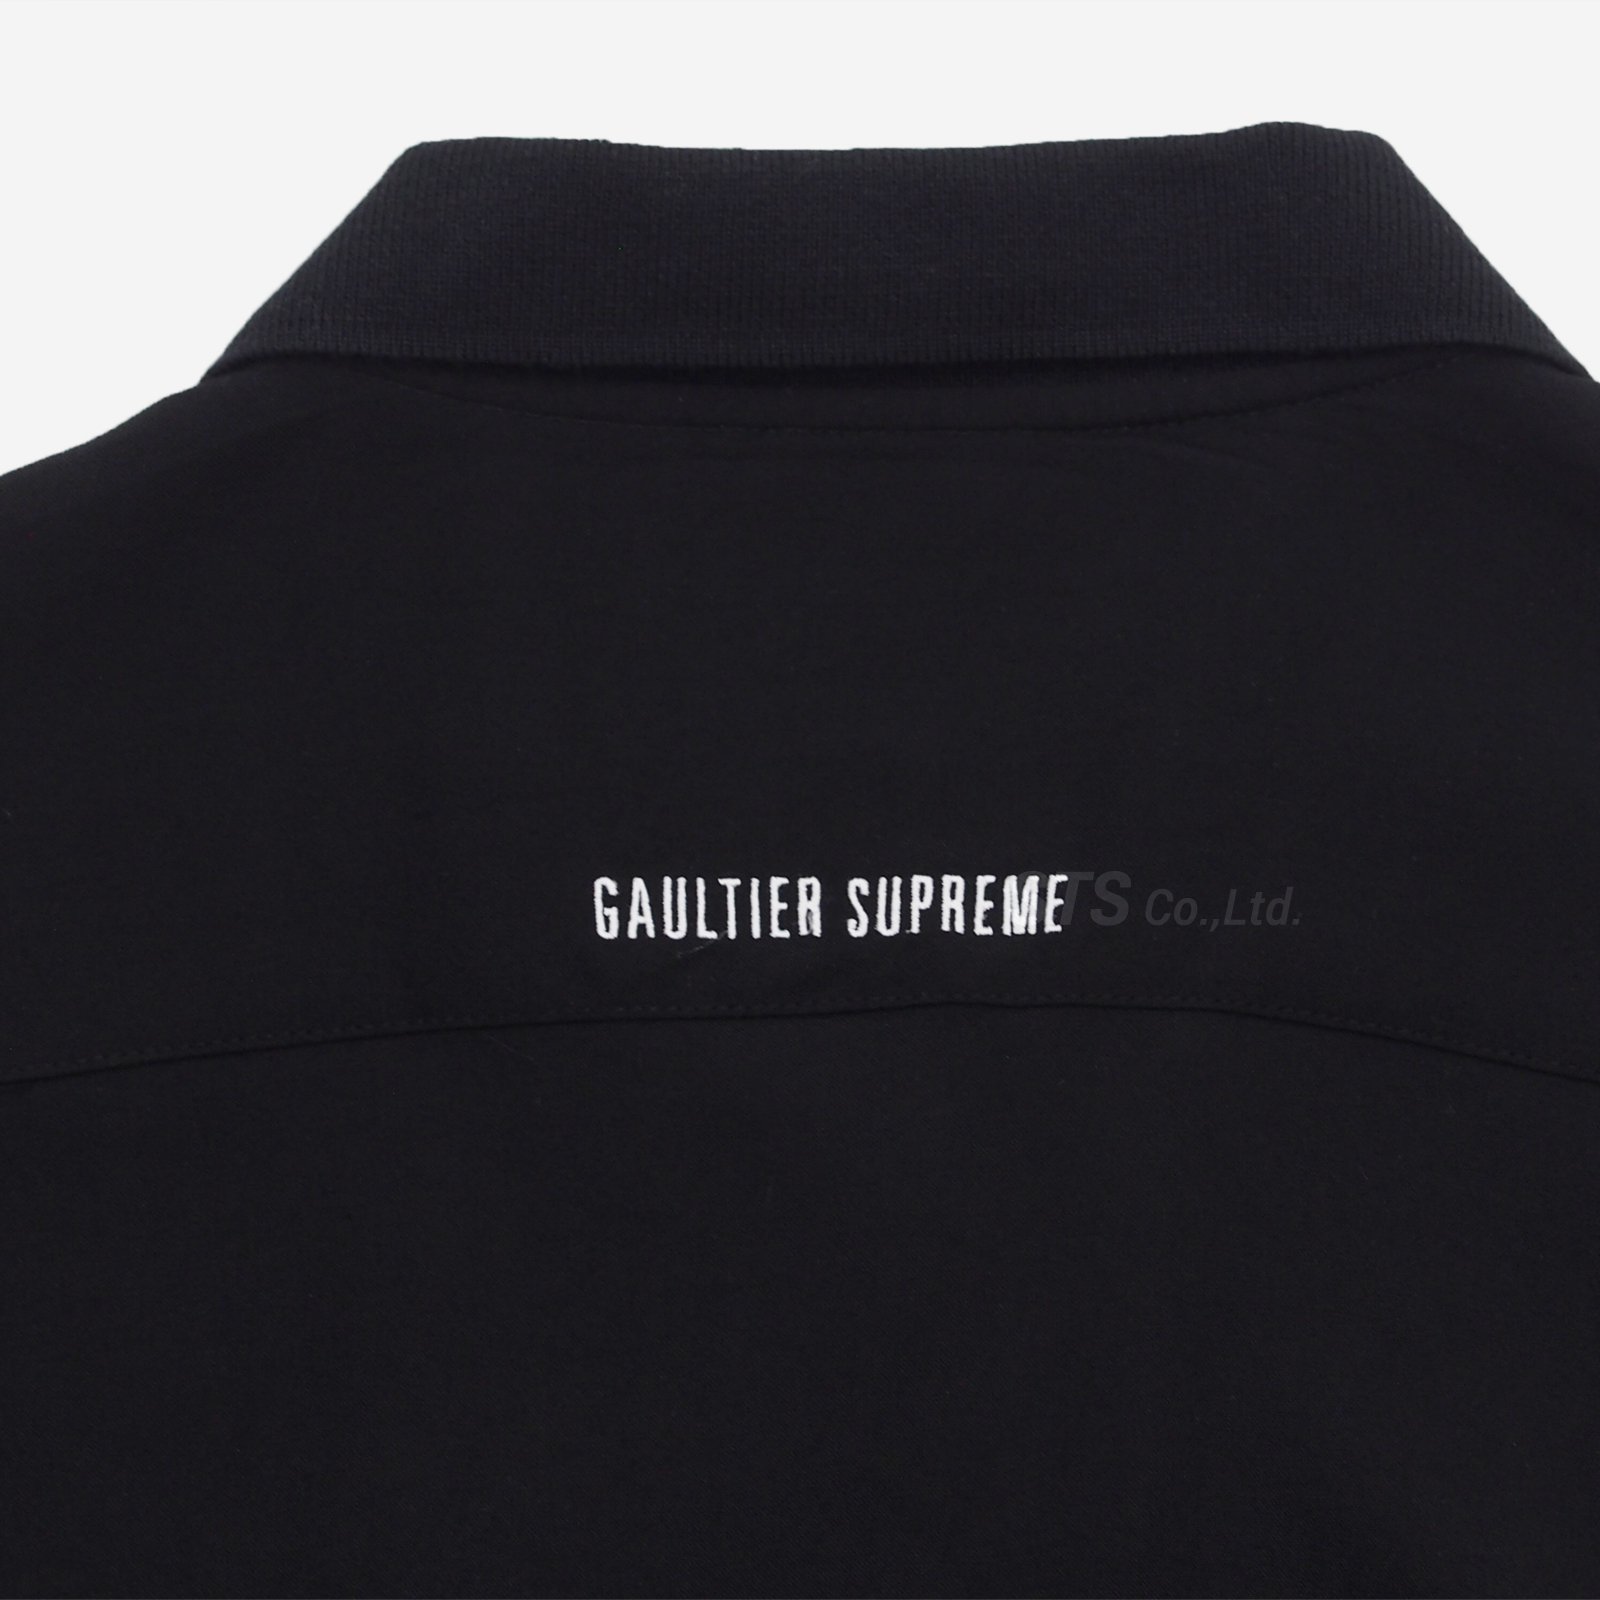 Supreme/Jean Paul Gaultier Flower Power Rayon Shirt - ParkSIDER